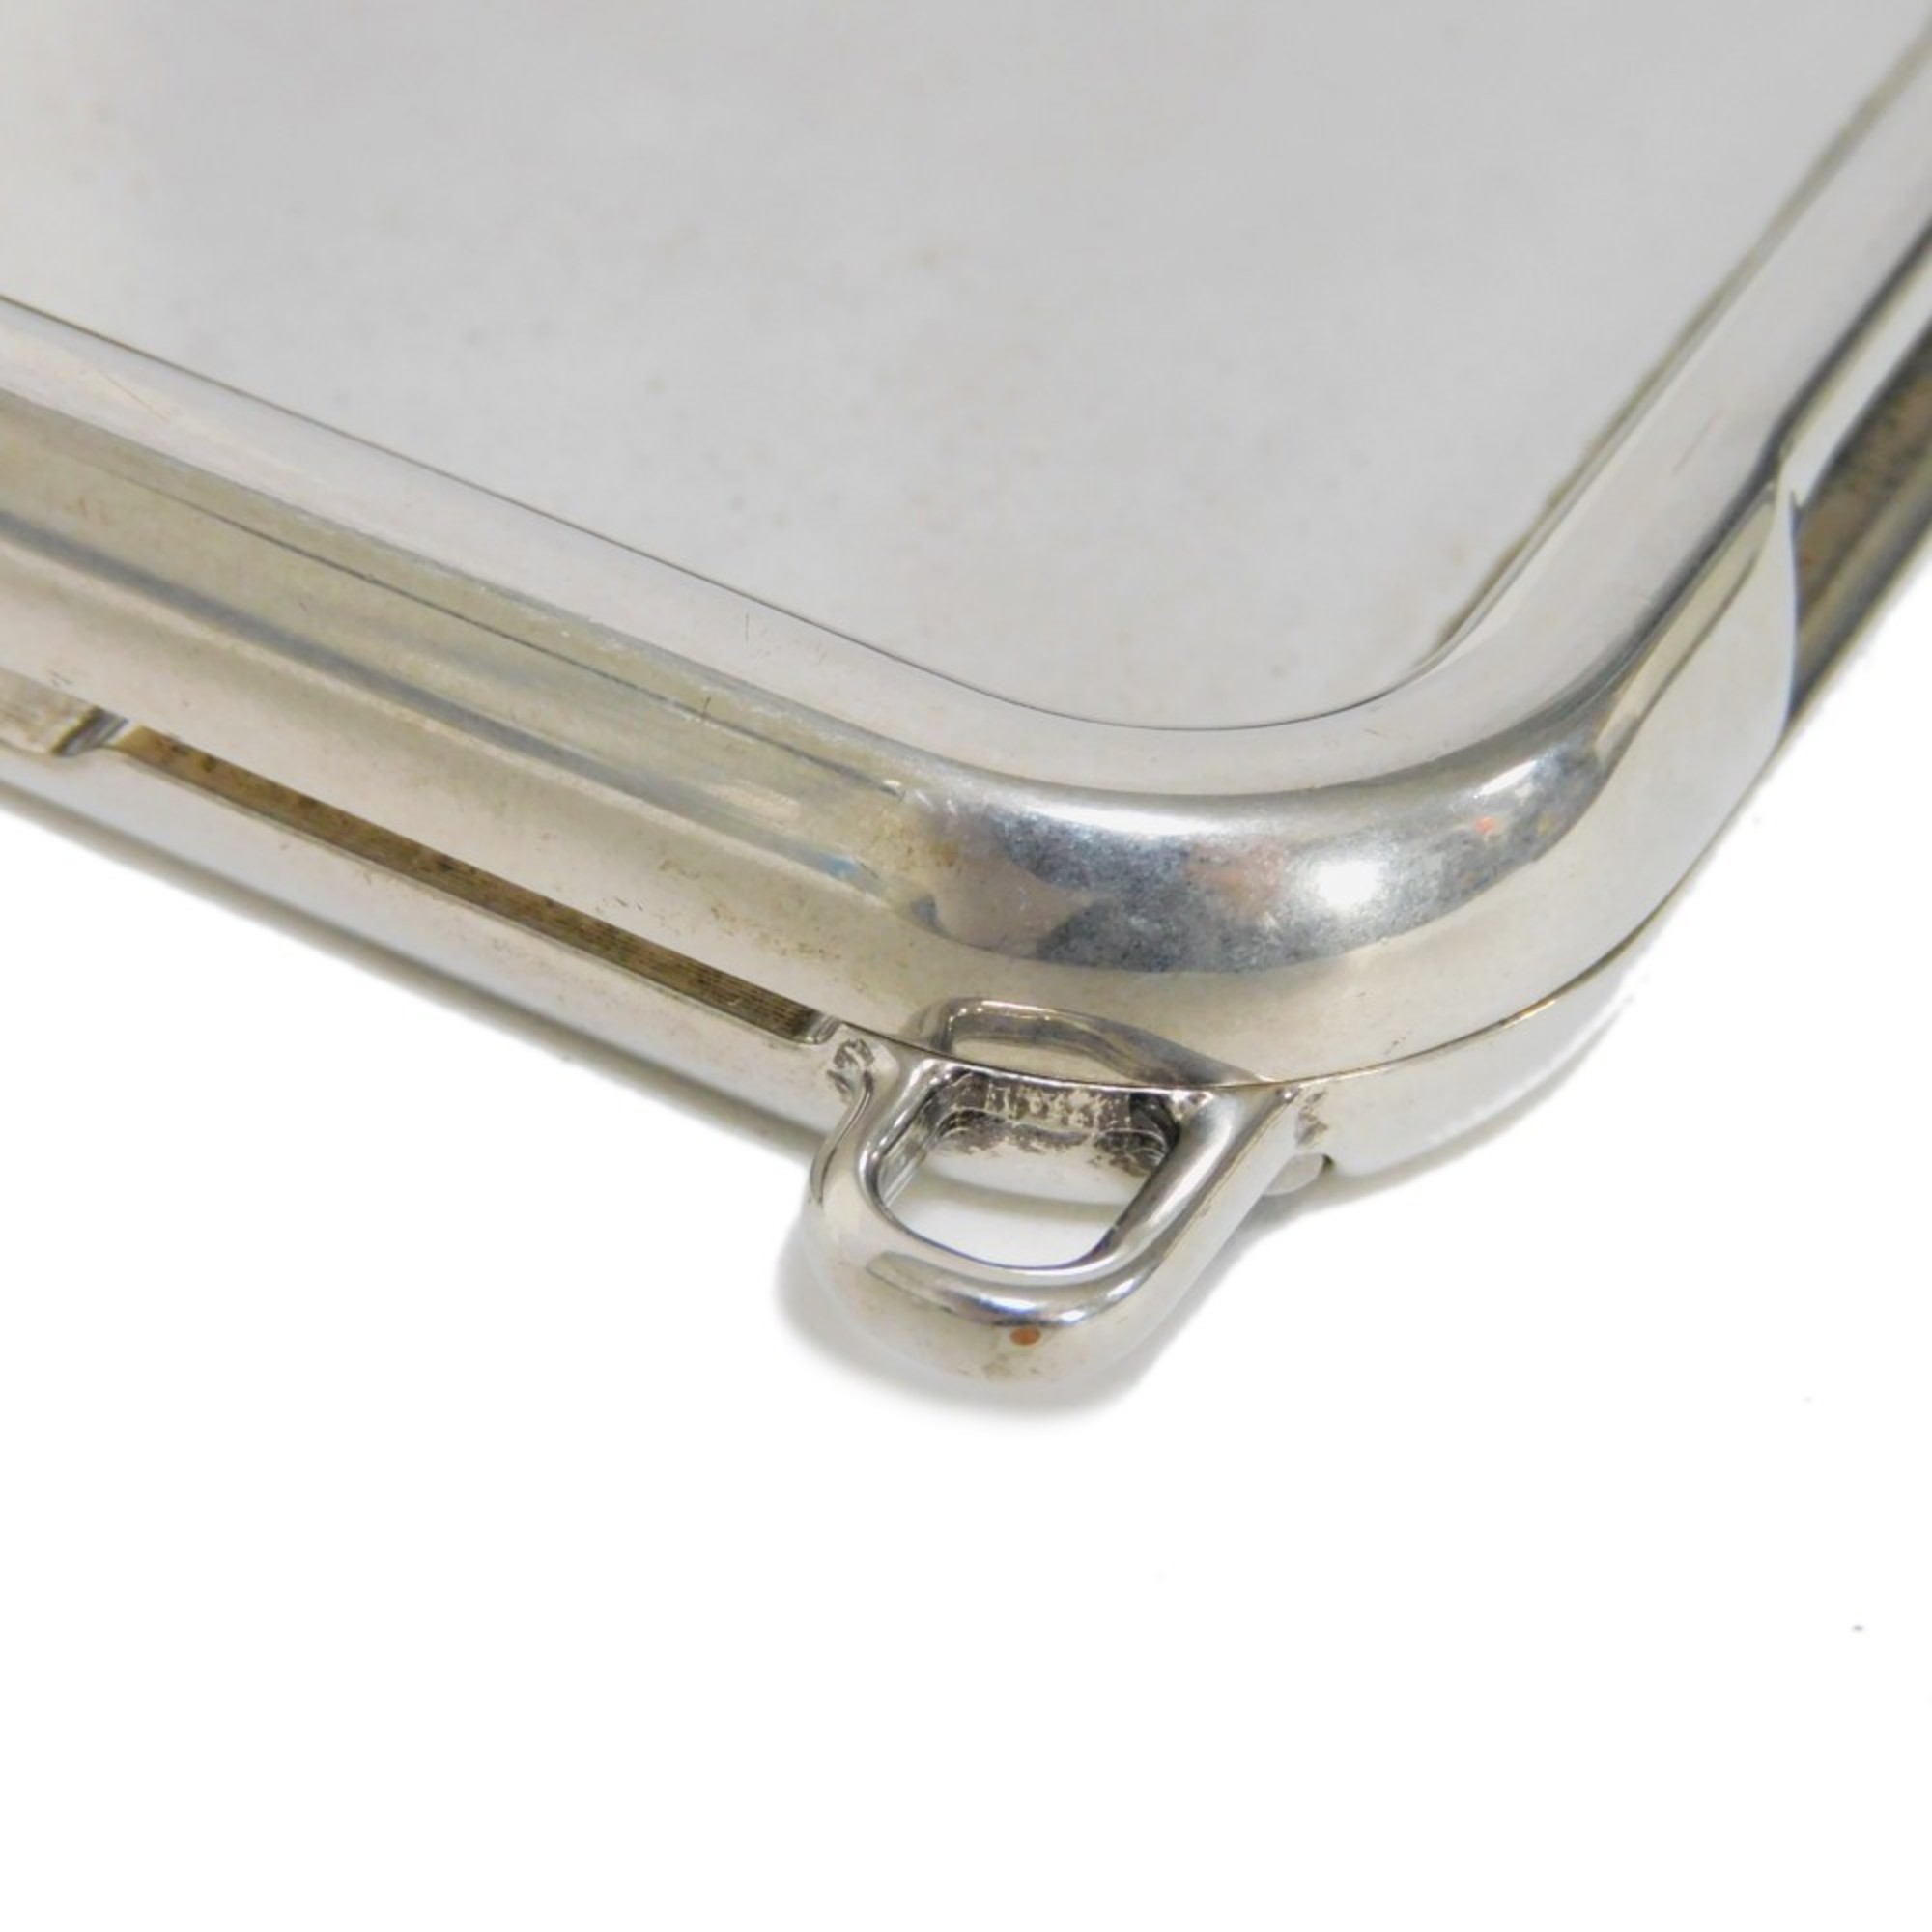 BALENCIAGA Smartphone Case iPhone 12 Chain Black New Embossed Metal Silver 667591 JFC1Y 8122 Men's Women's